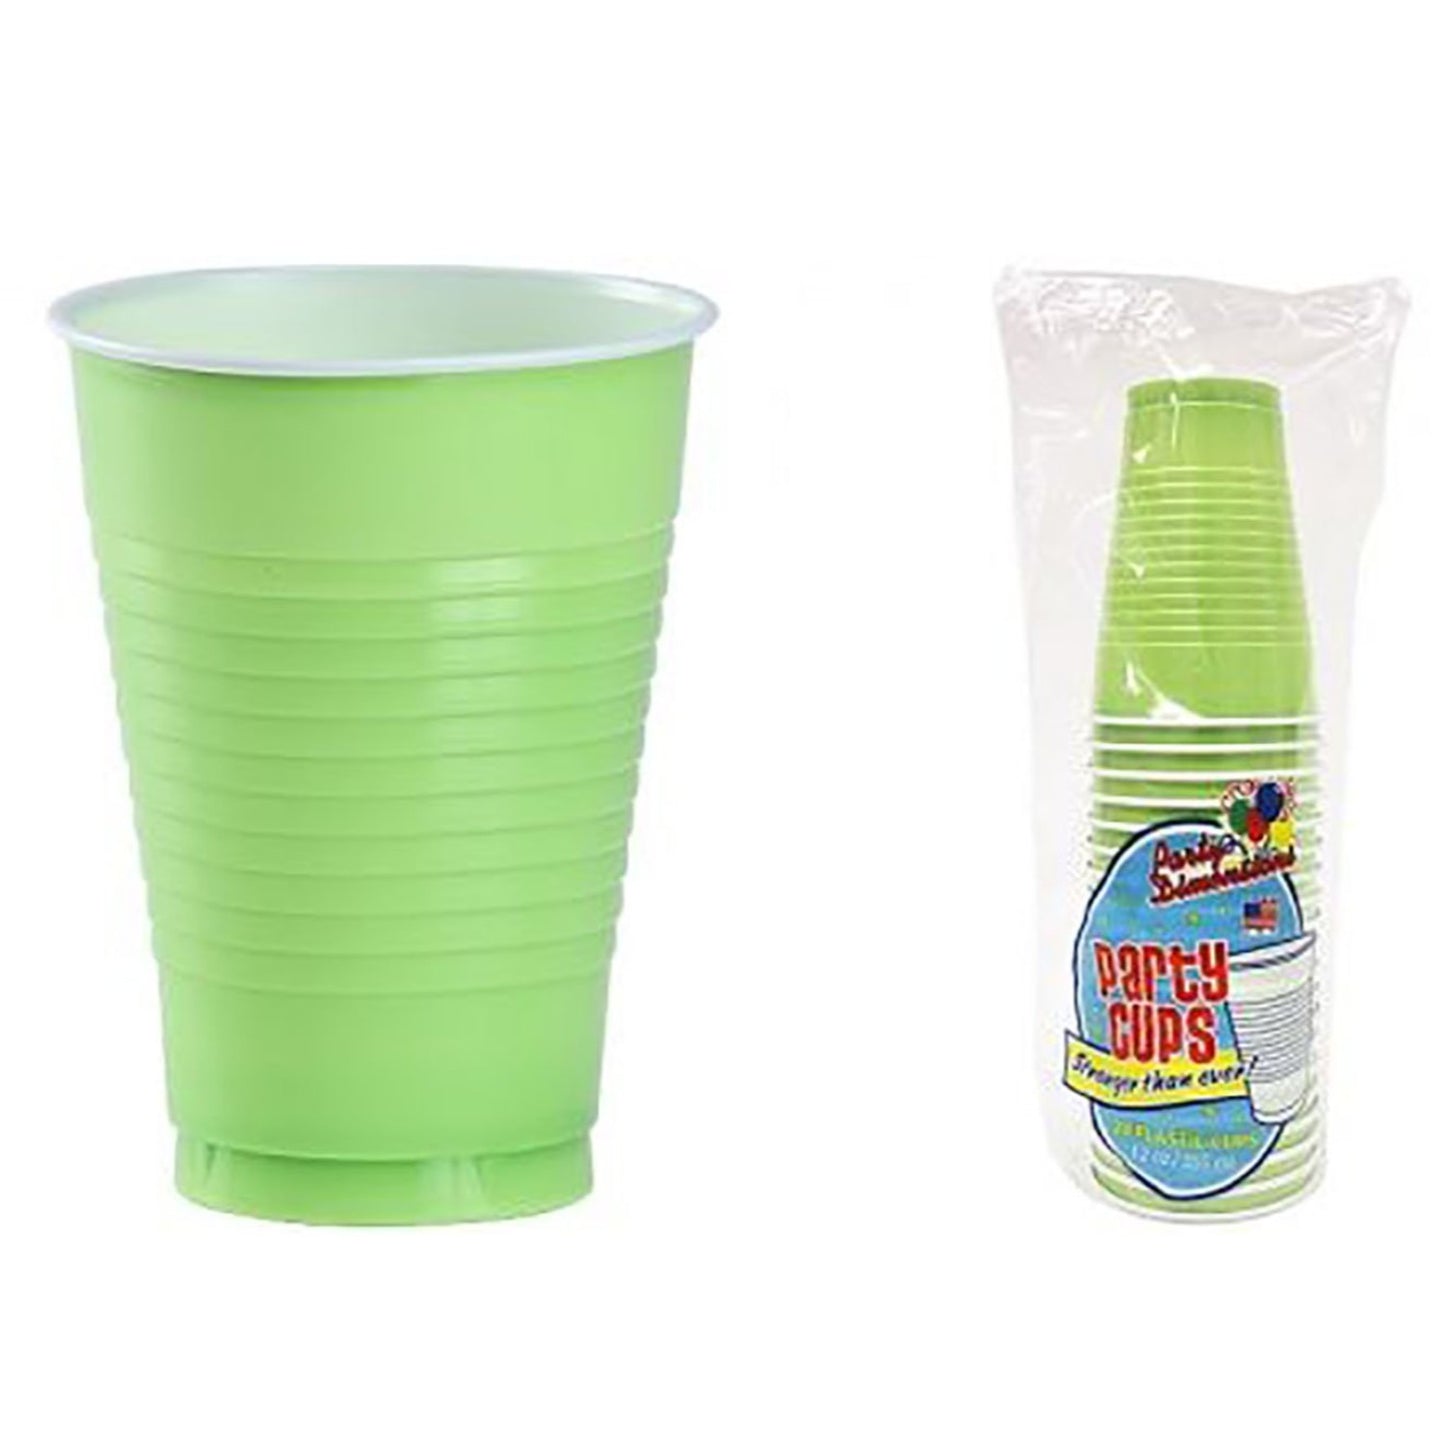 16/18oz Trans Soft Sided Plastic Cups